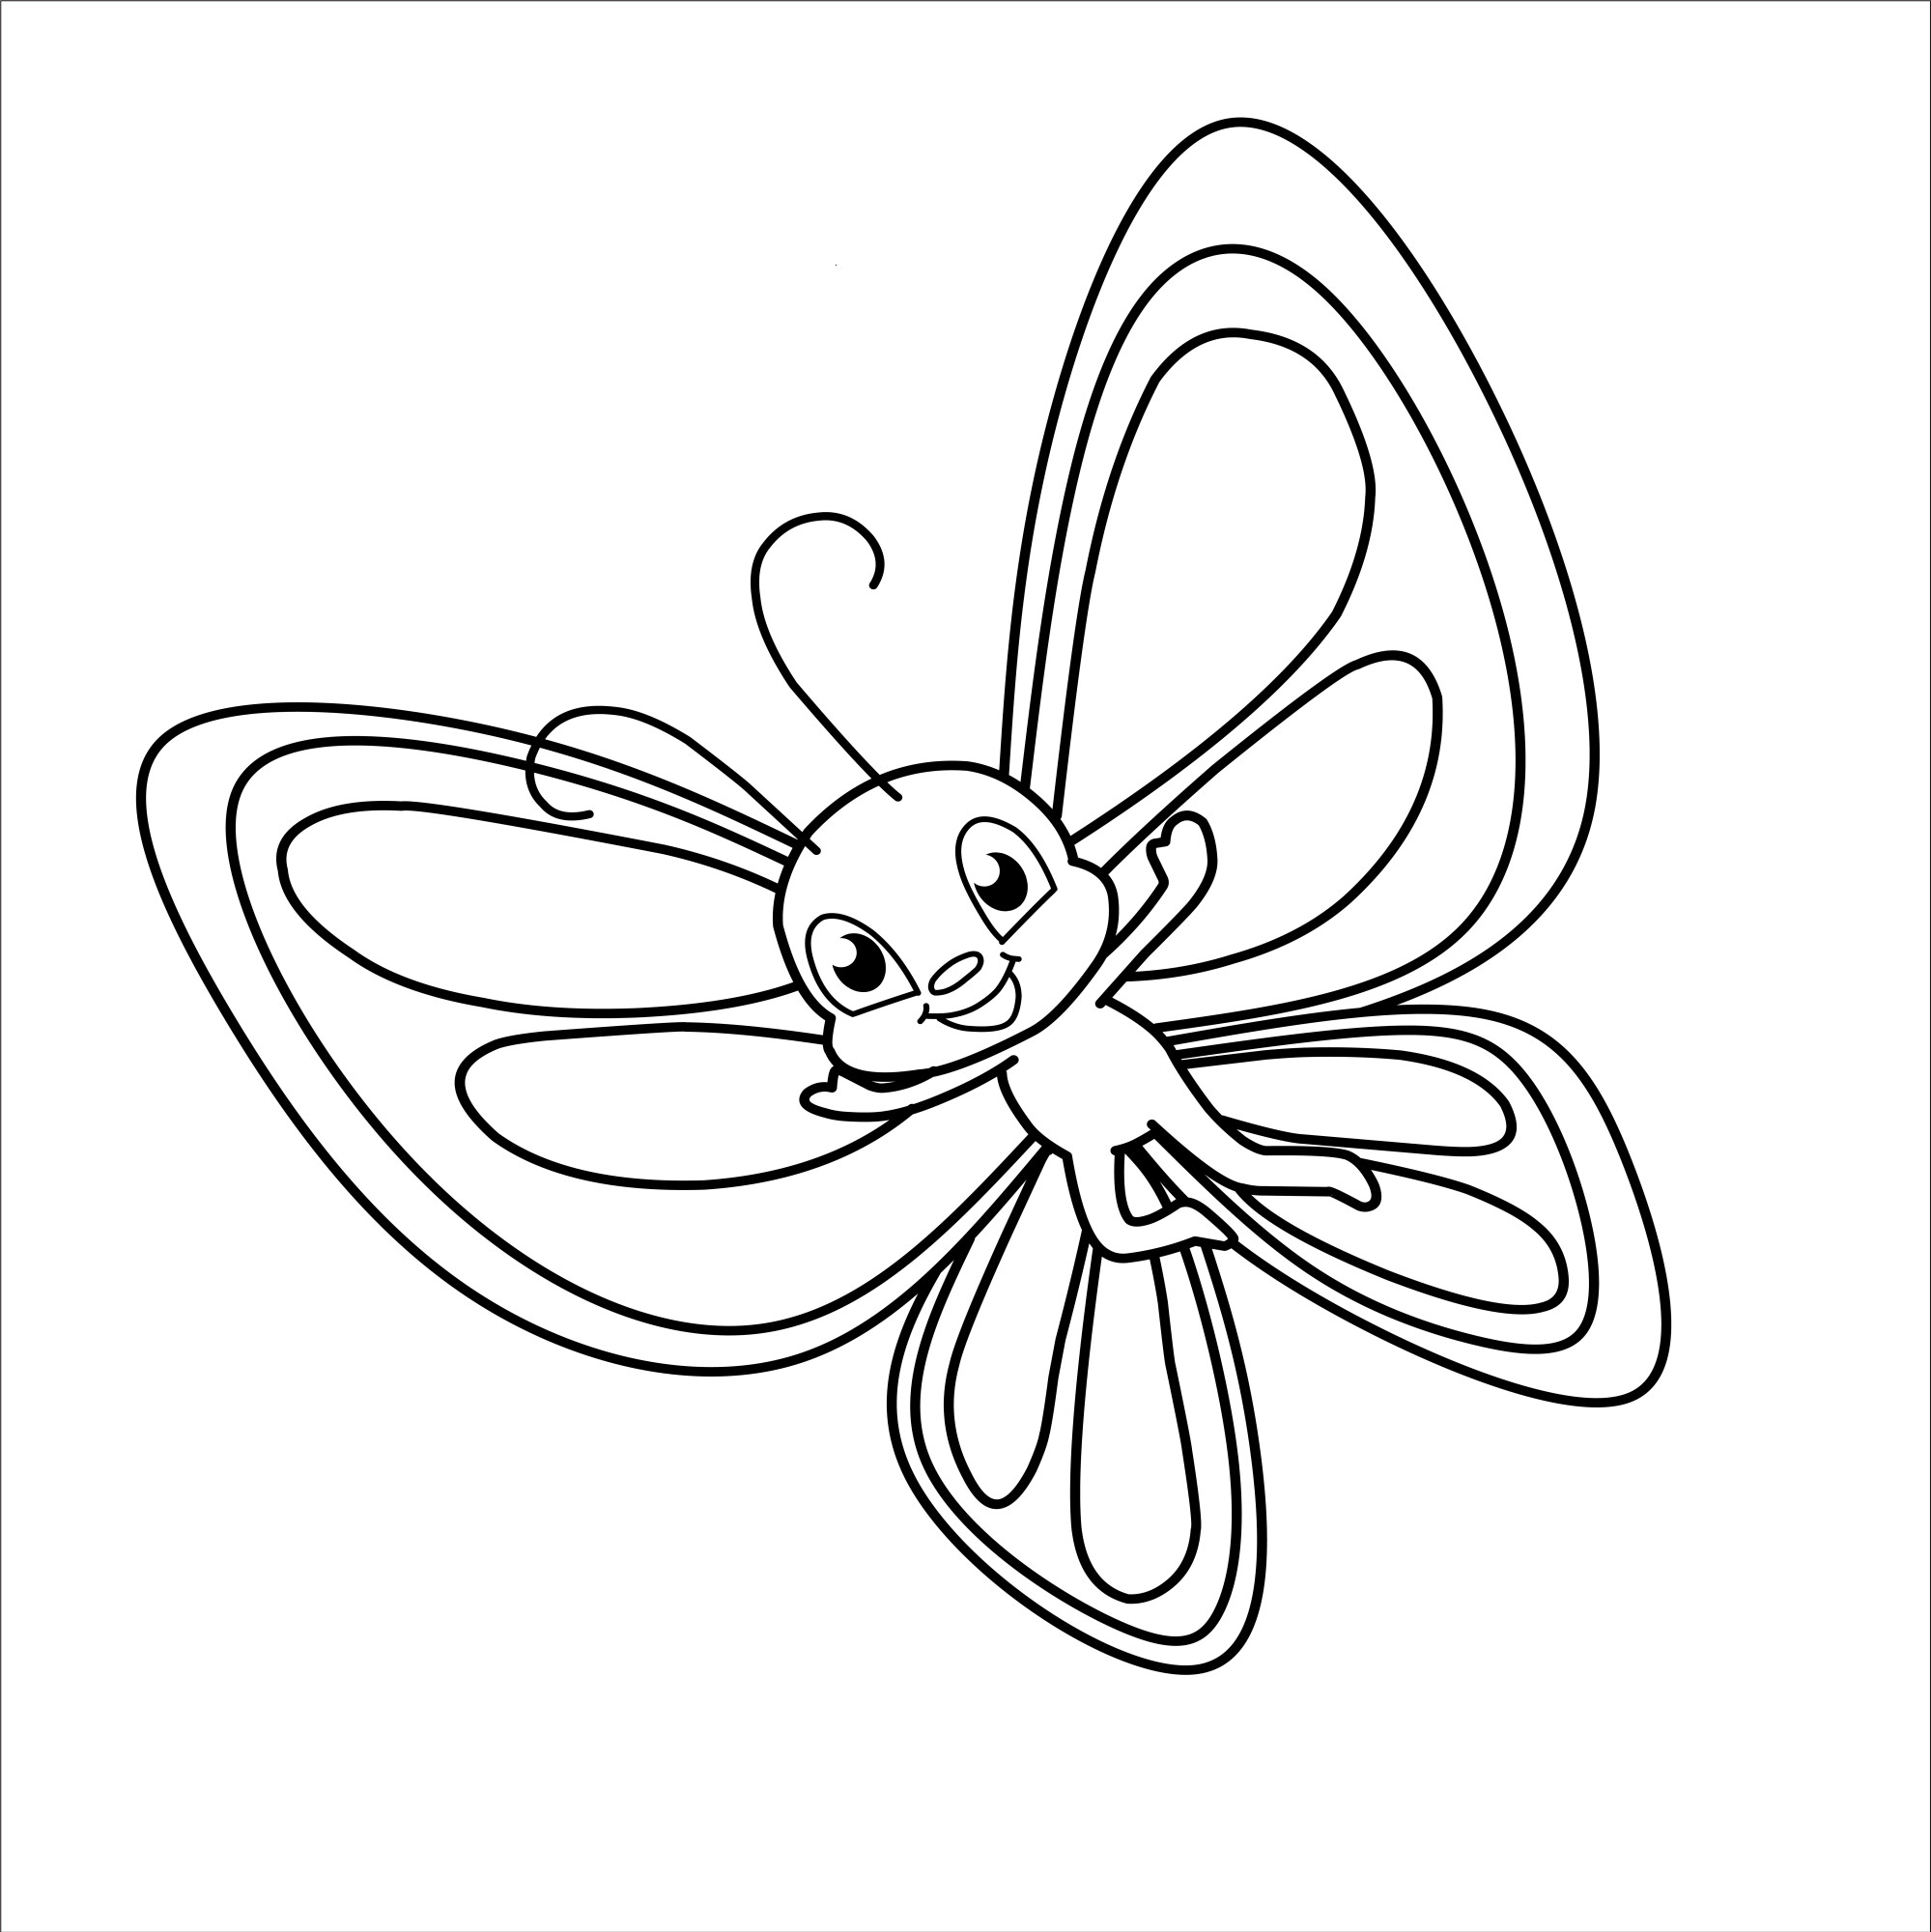 Раскраска для детей: мультяшная улыбающаяся бабочка